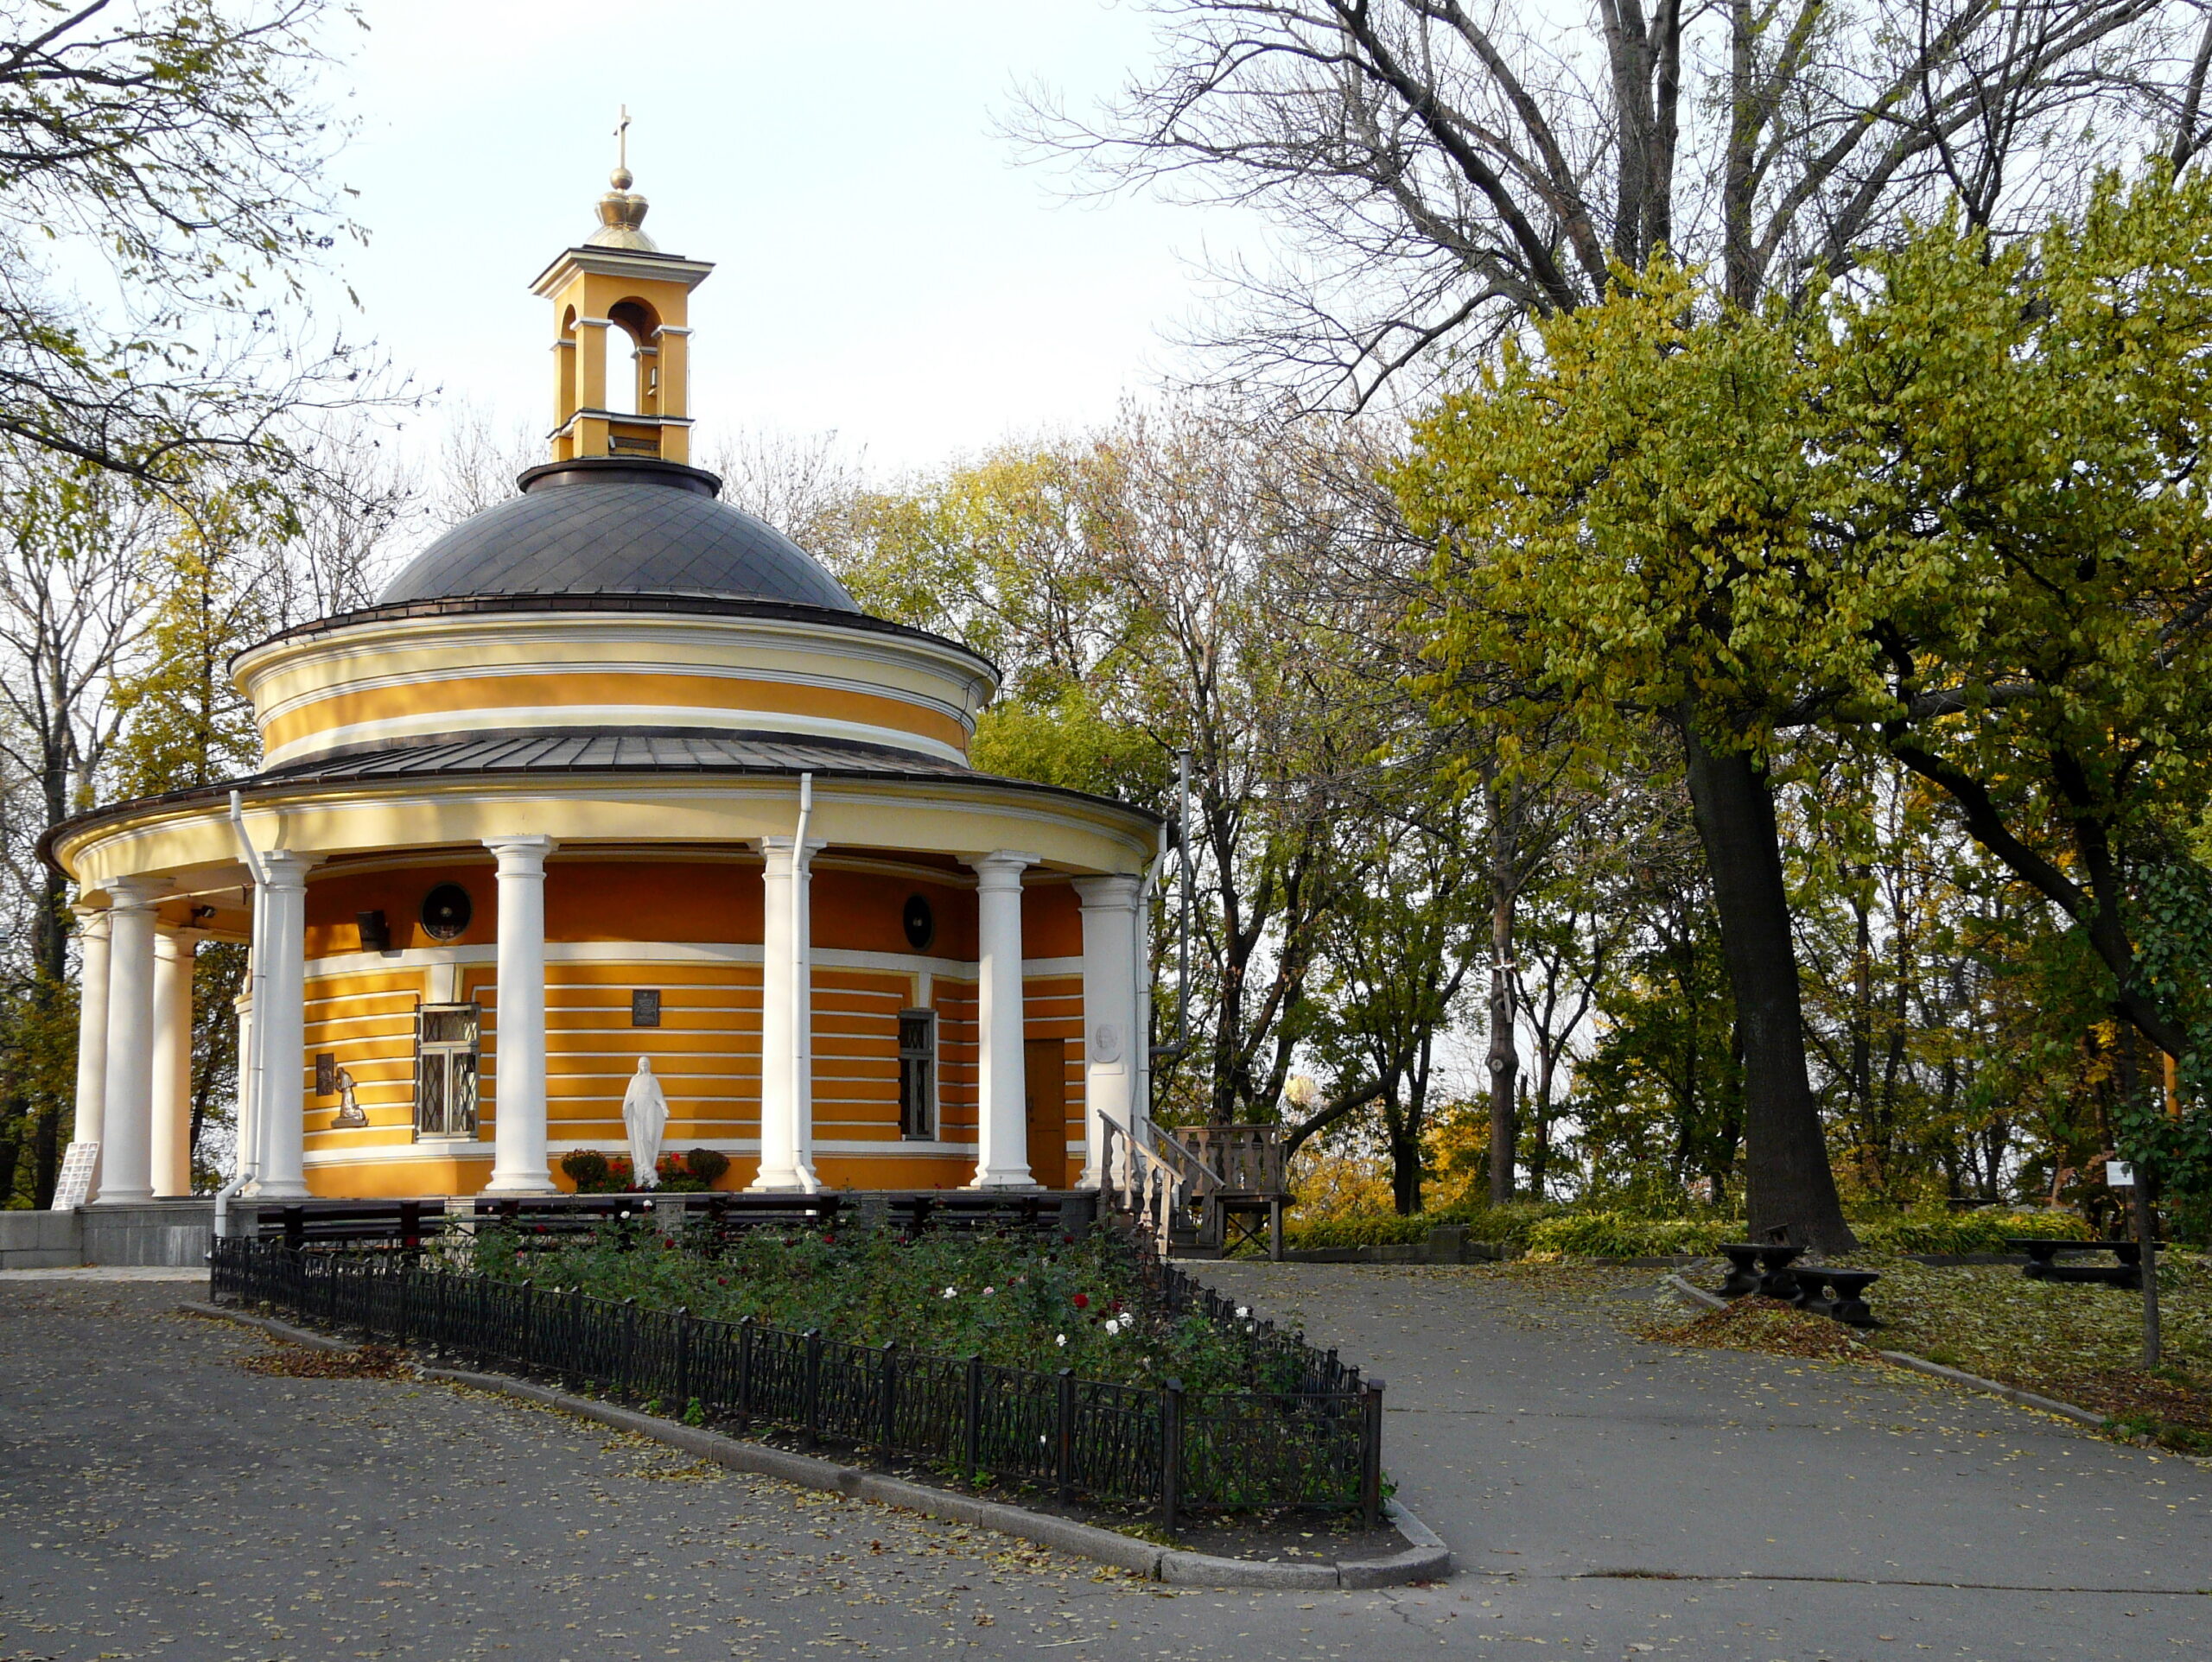 National mausoleum of Ukraine - Askold's Grave